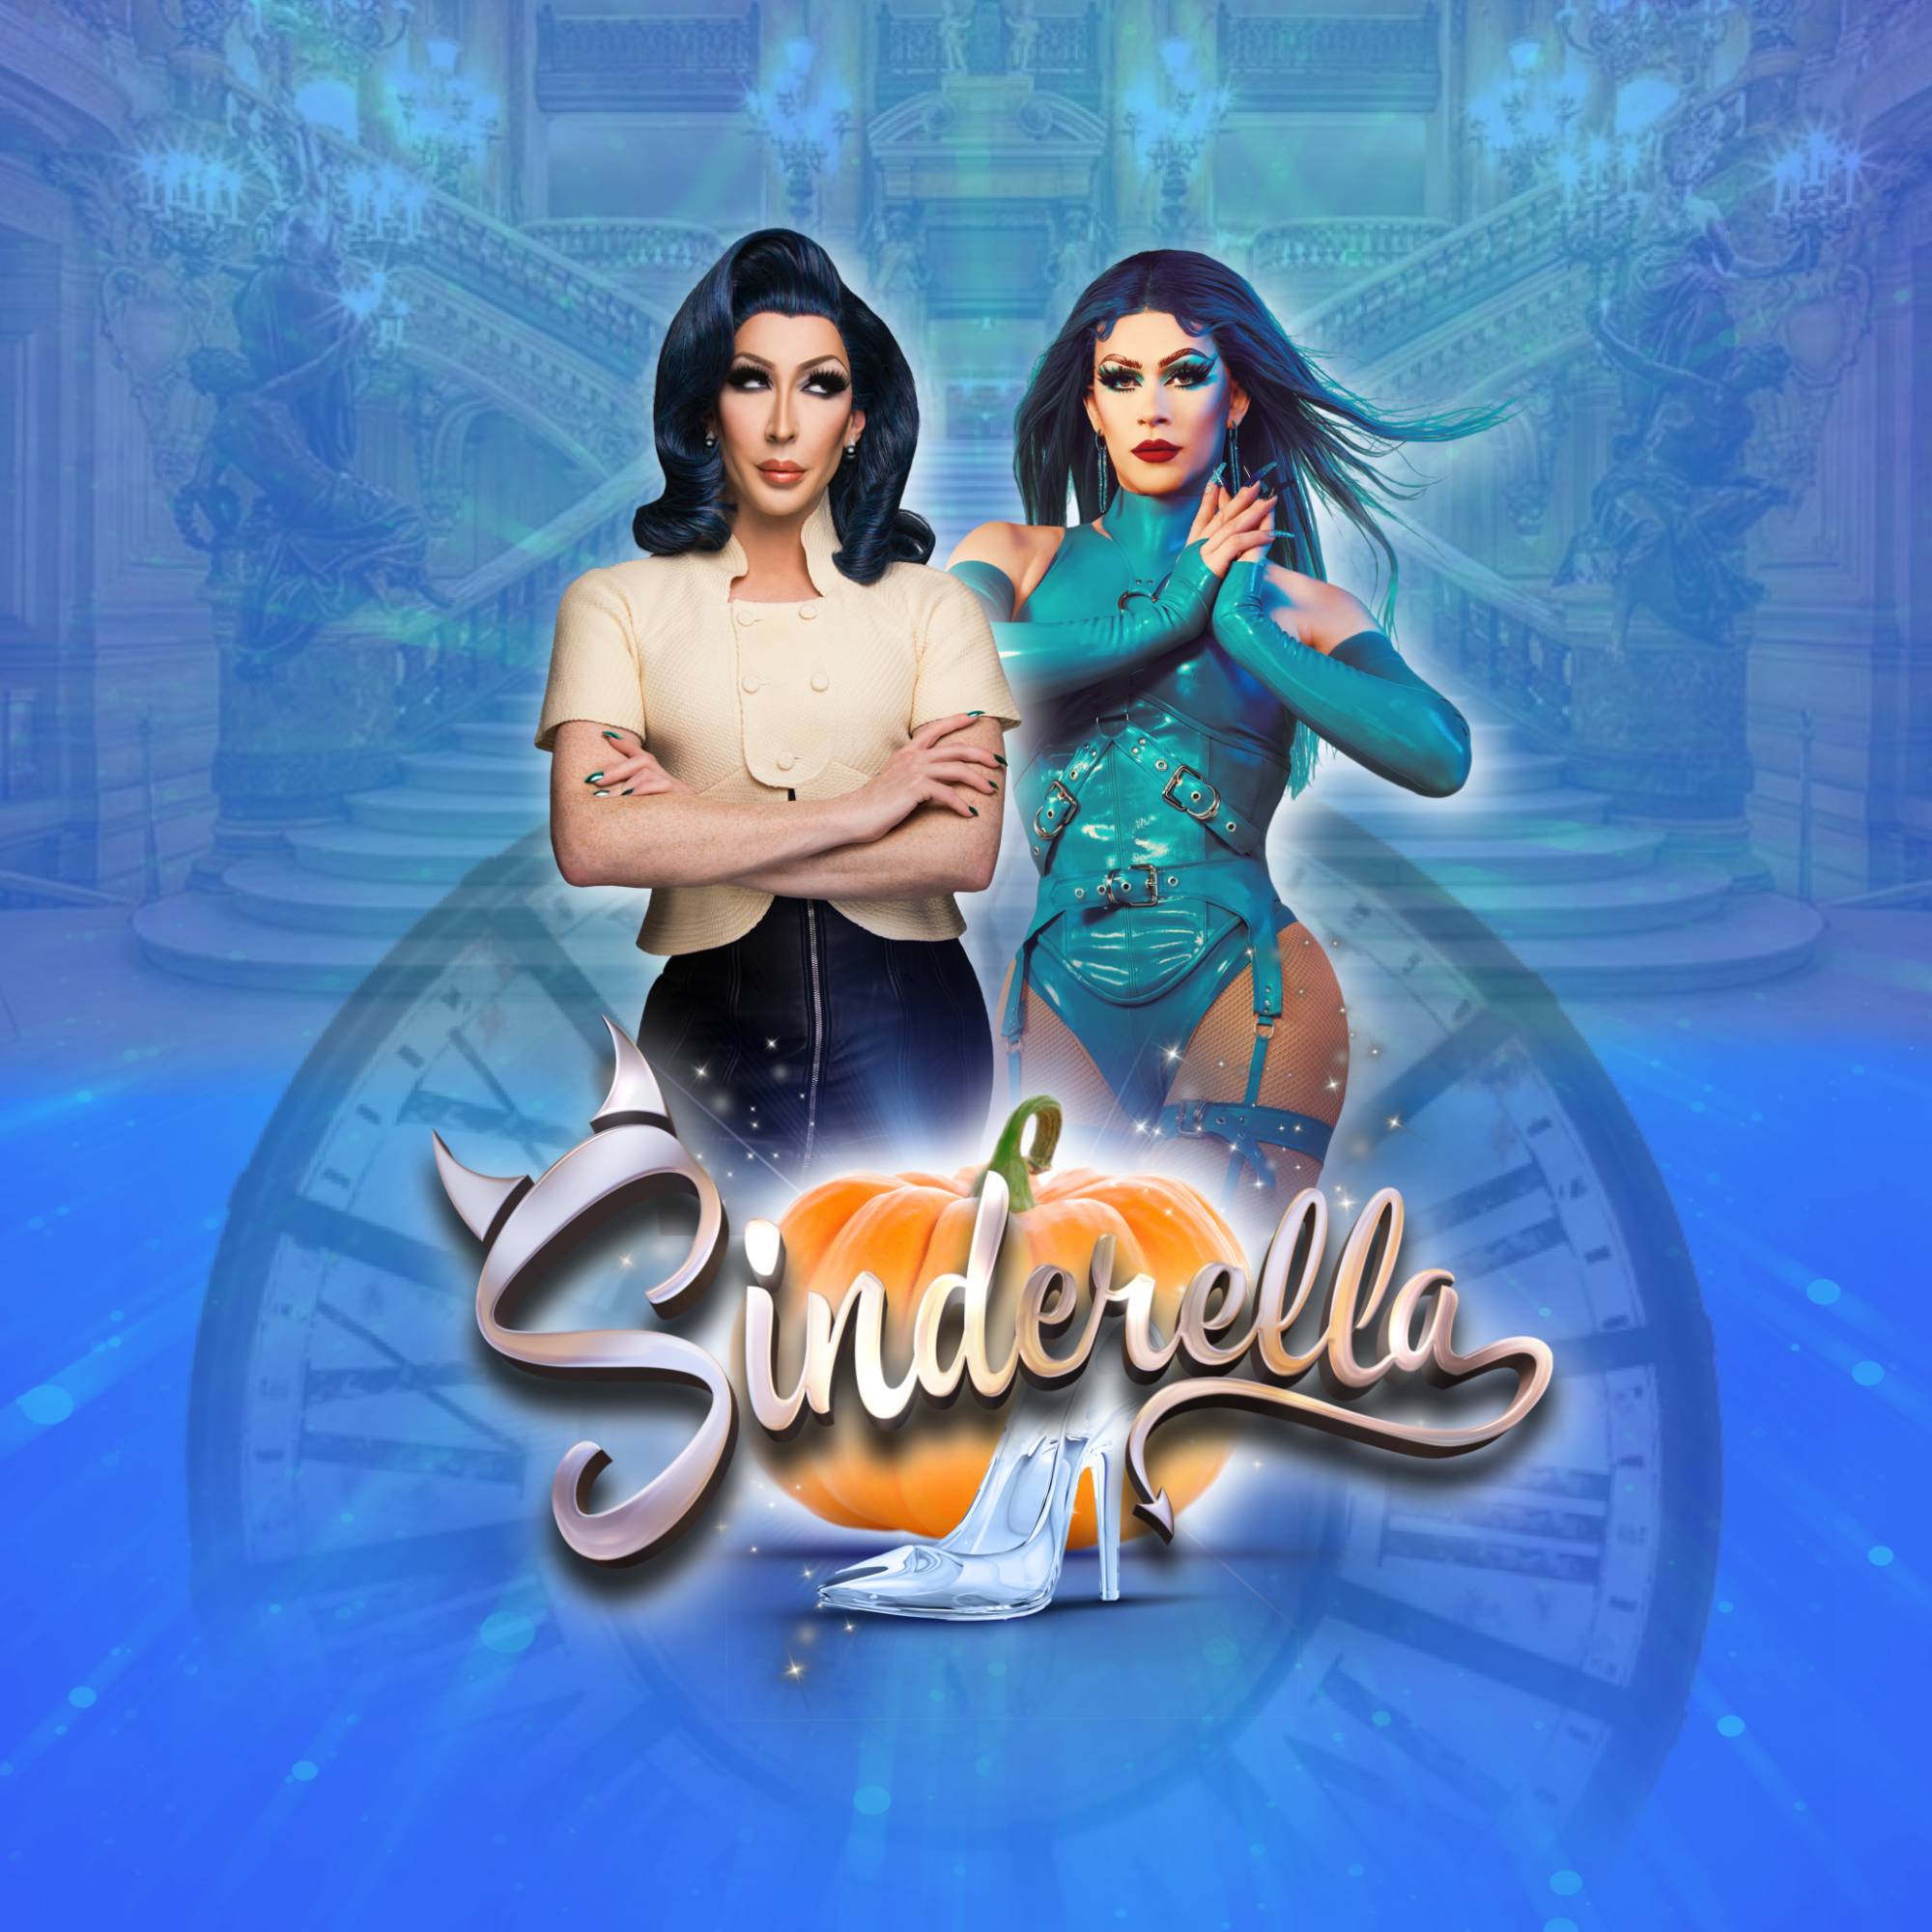 Sinderella - Adult Panto